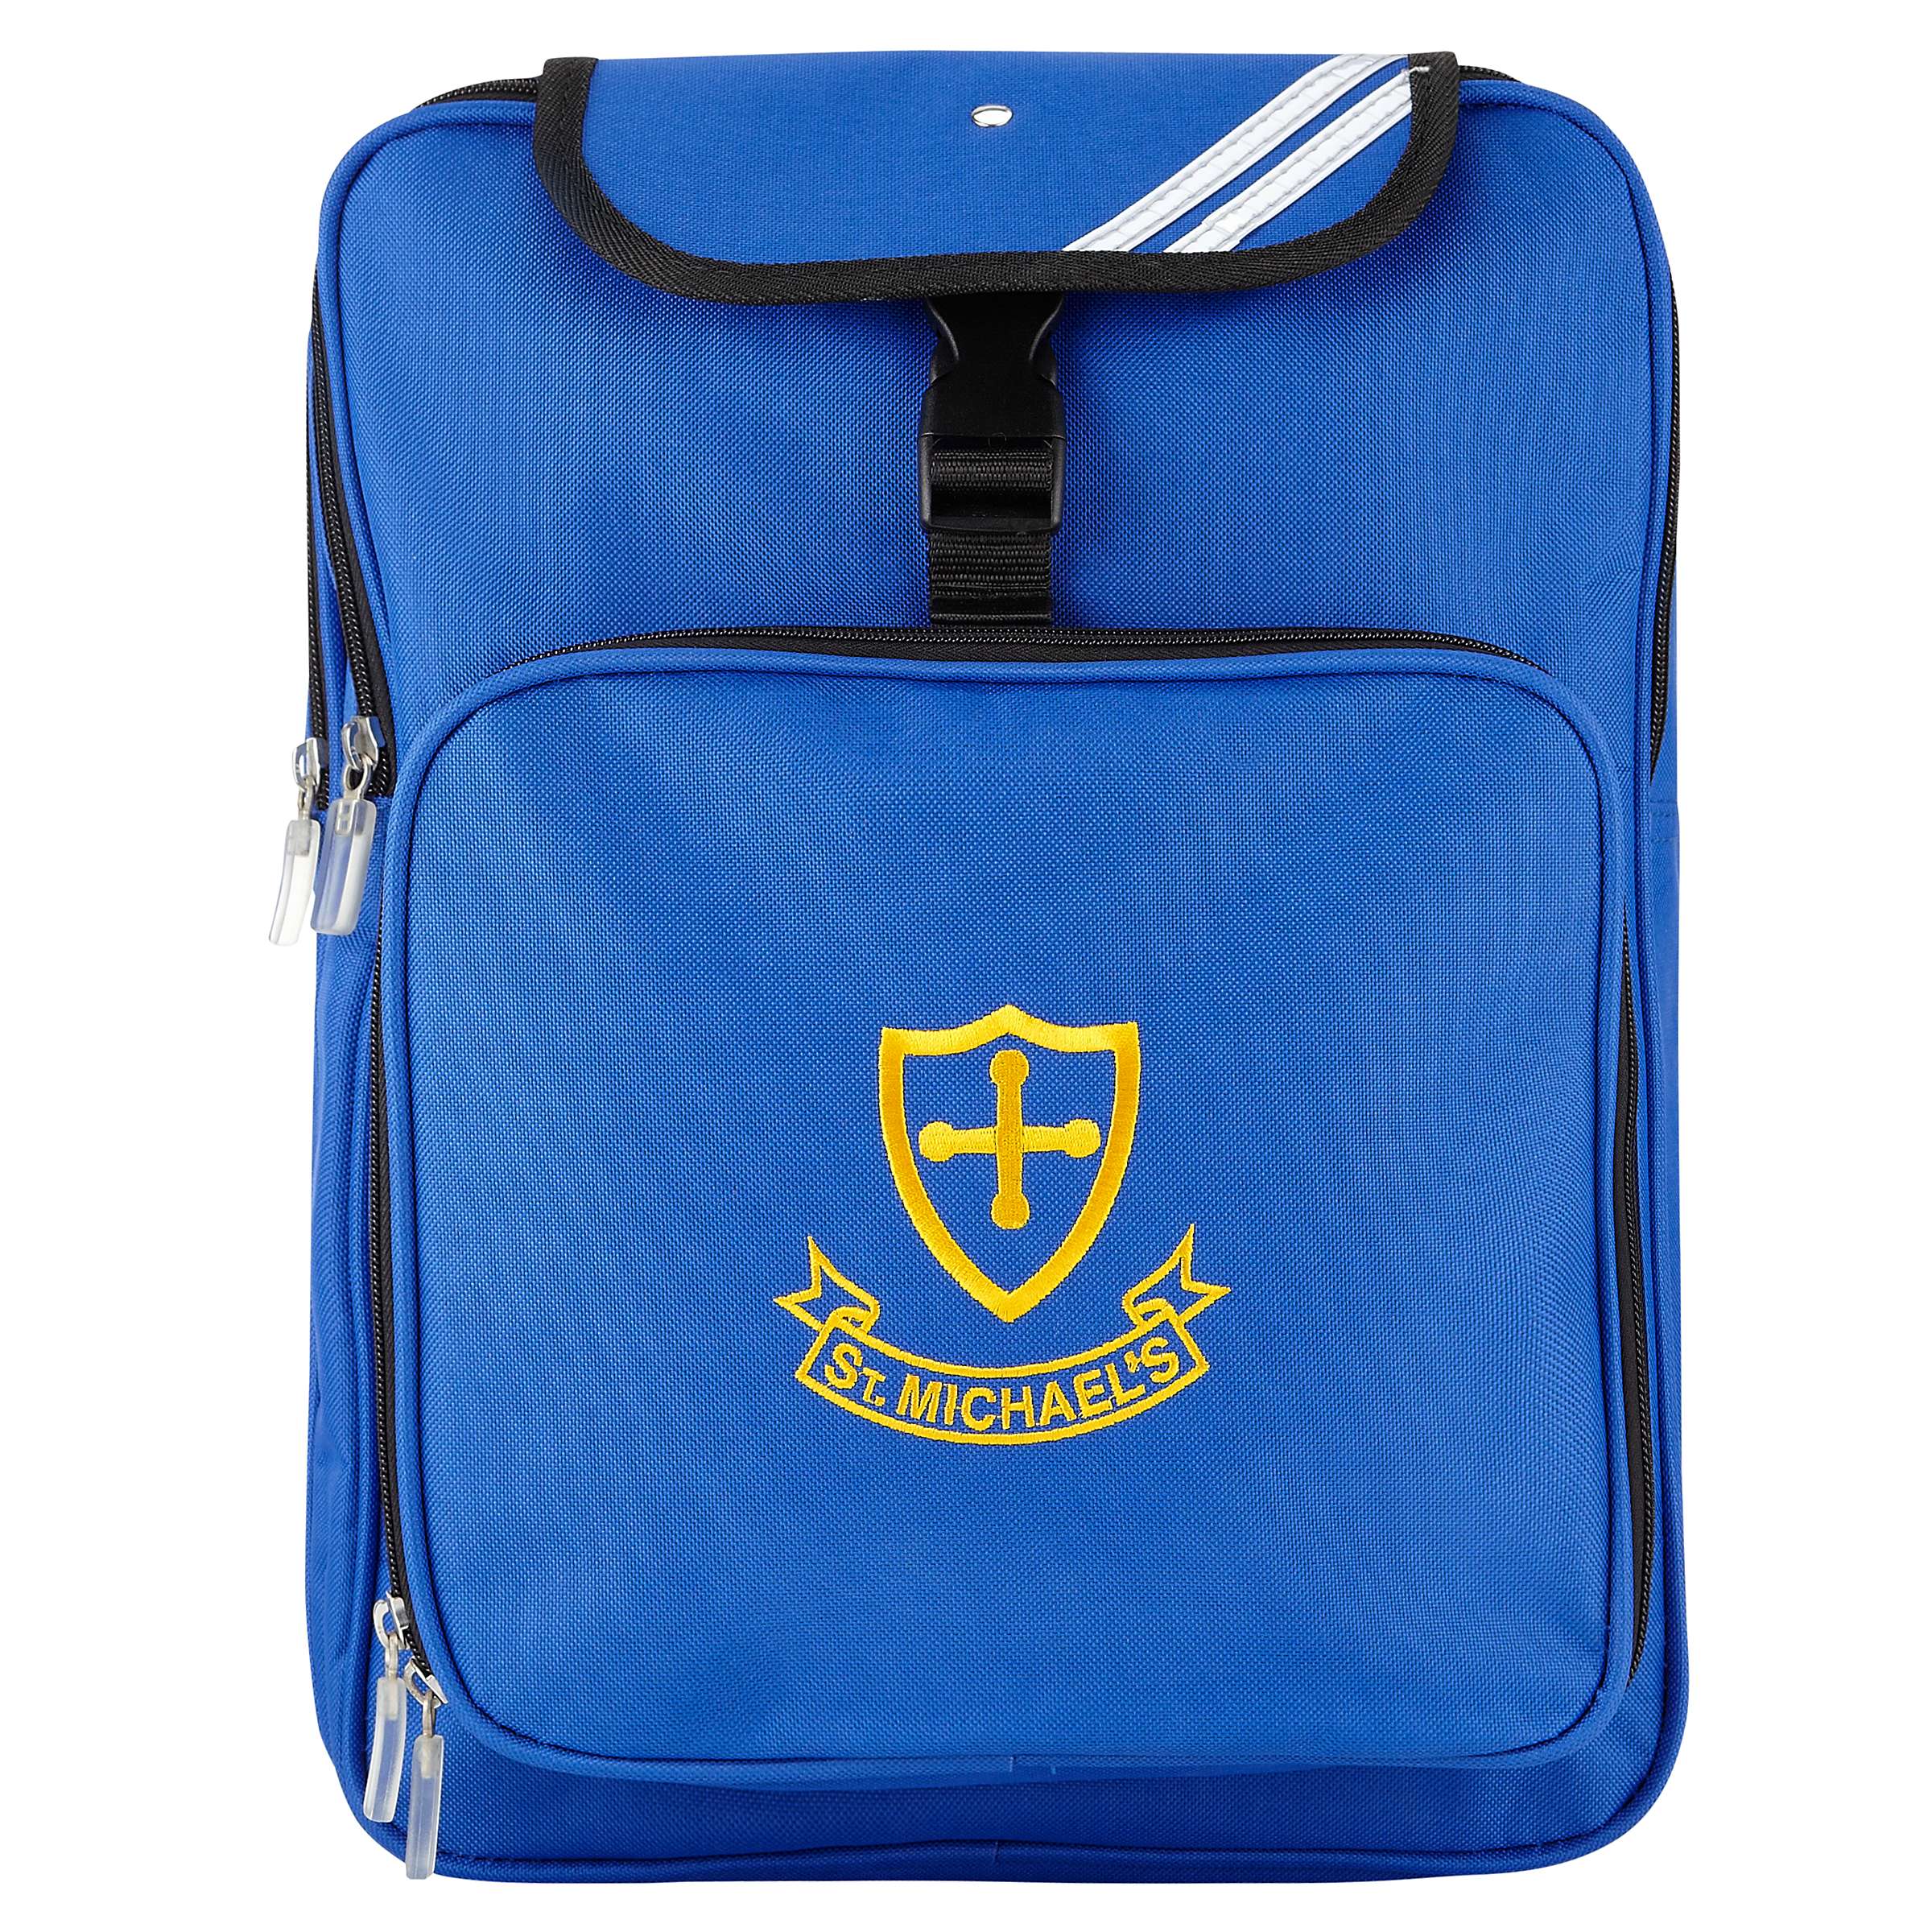 Buy St Michael's Church of England Preparatory School Unisex Backpack, Royal Blue Online at johnlewis.com